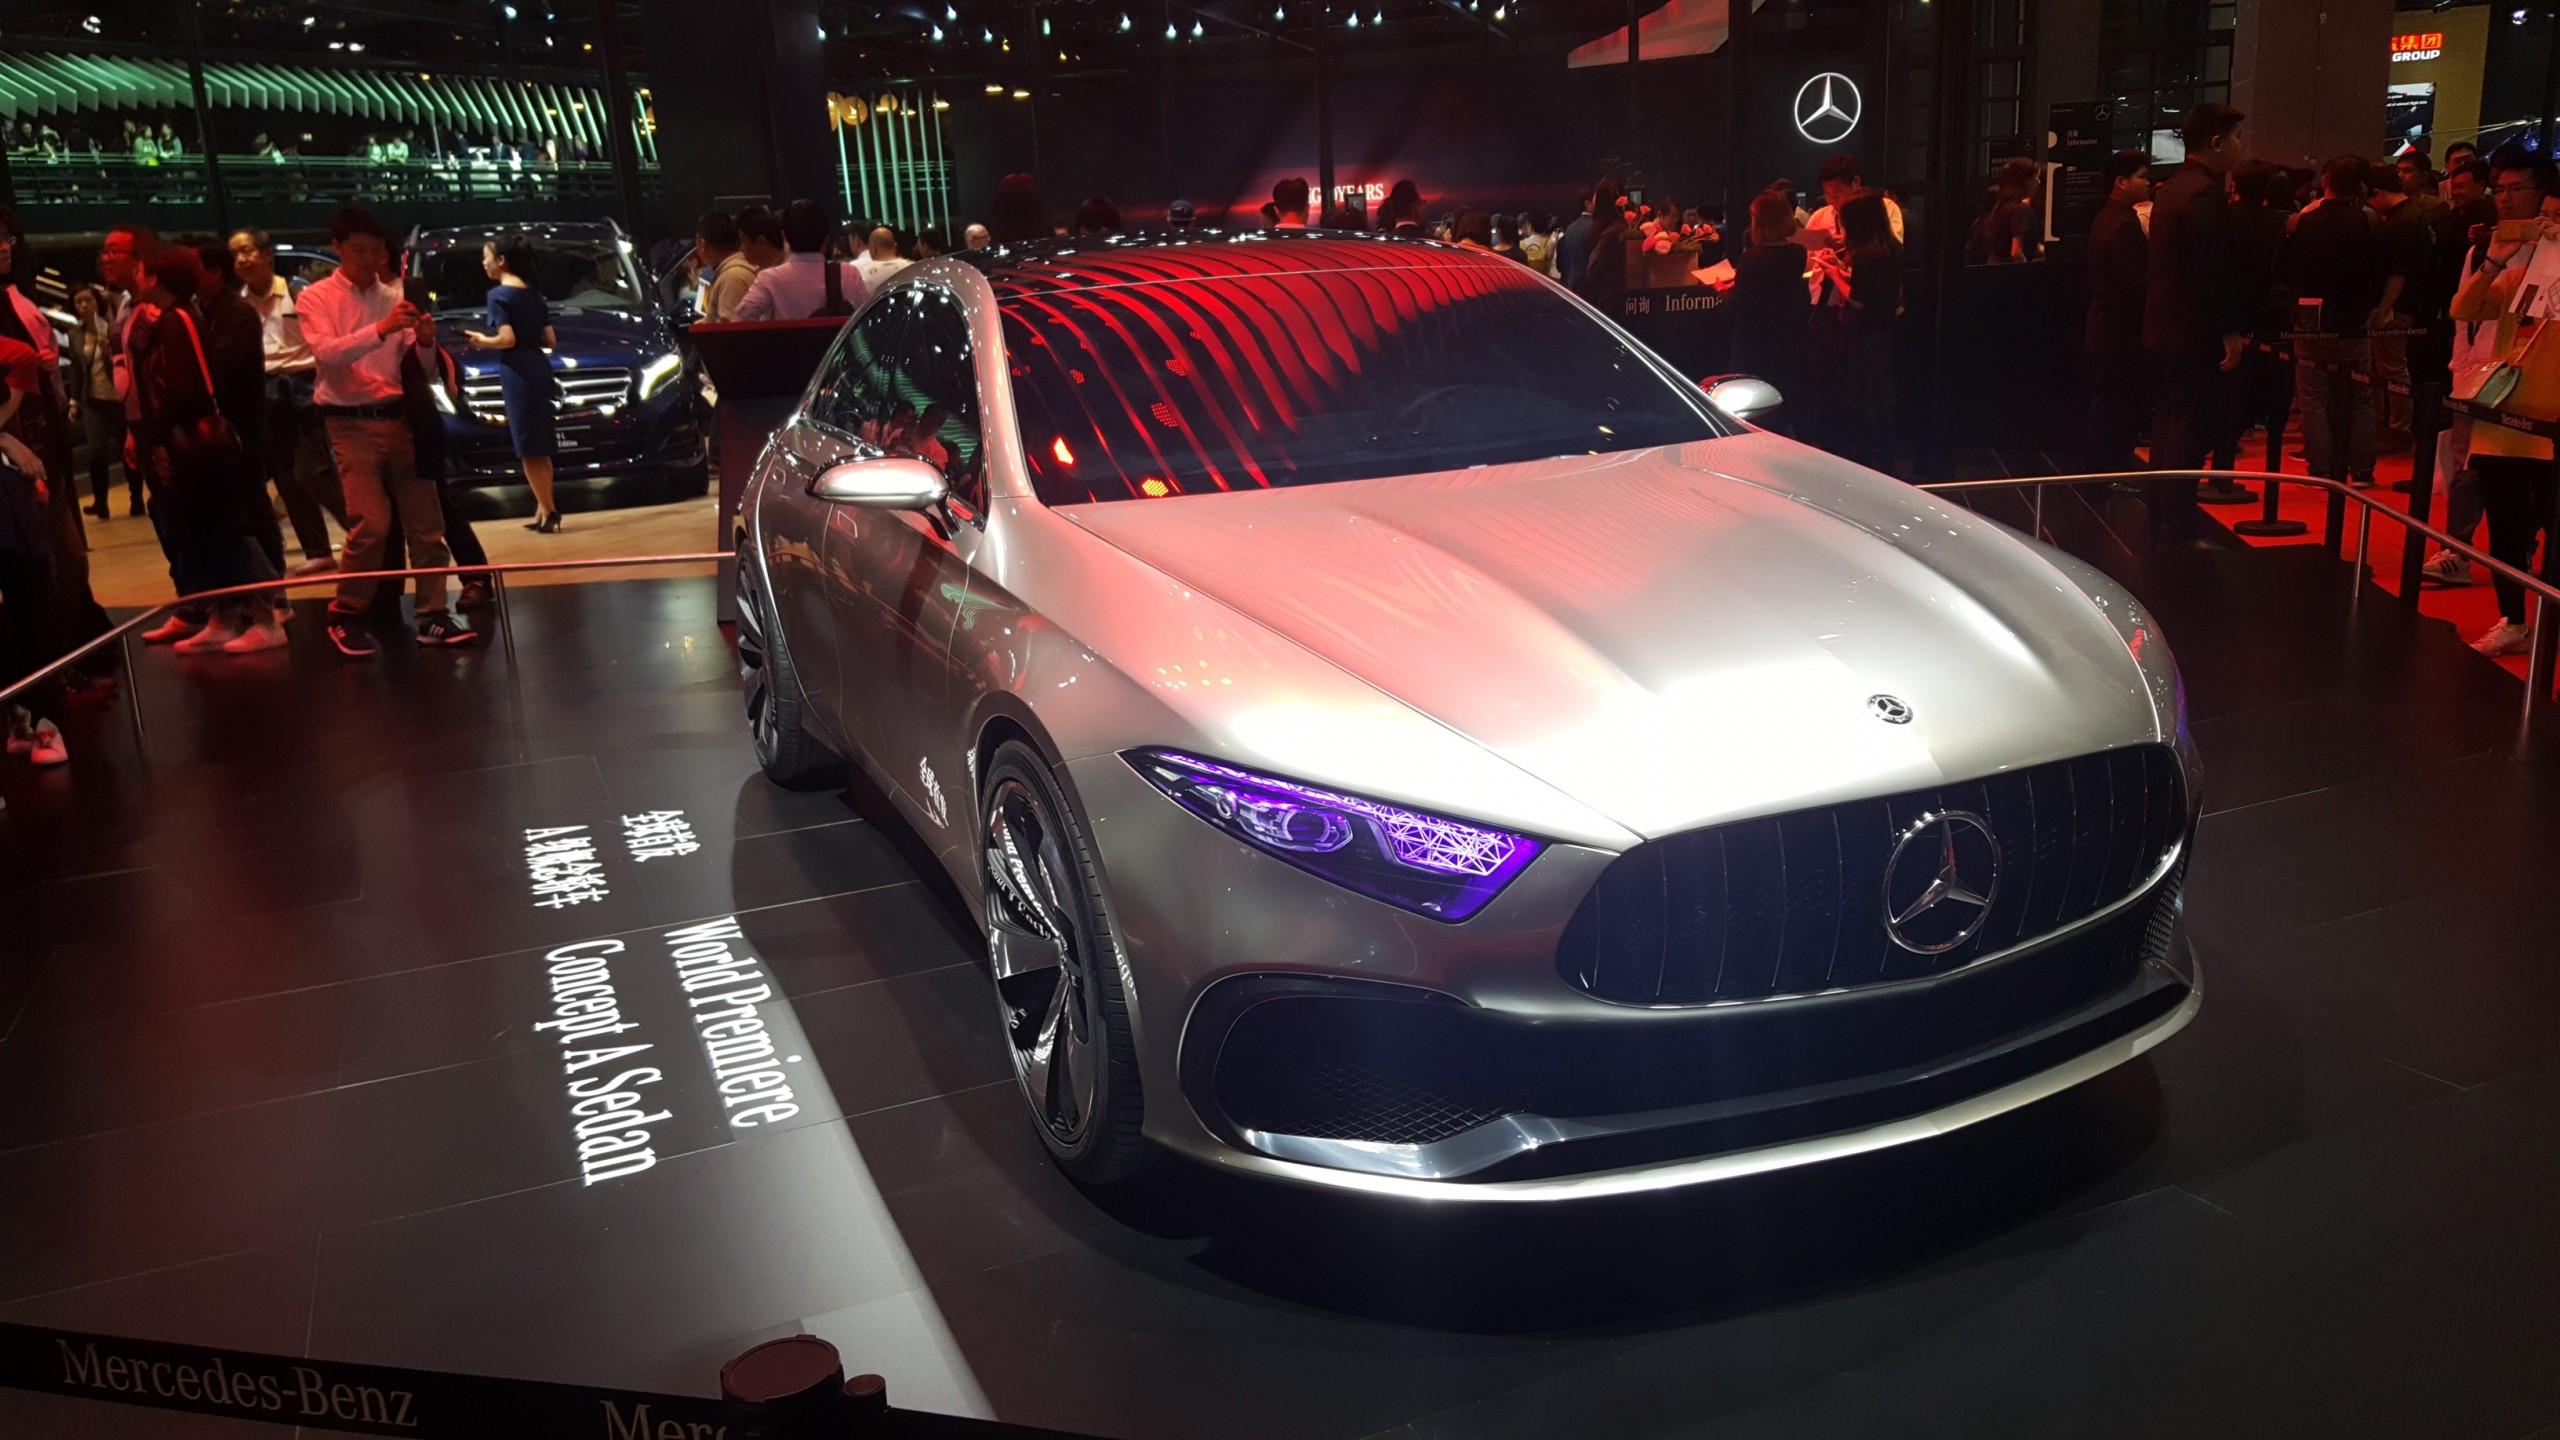 Mercedes-Benz Classe A Concept